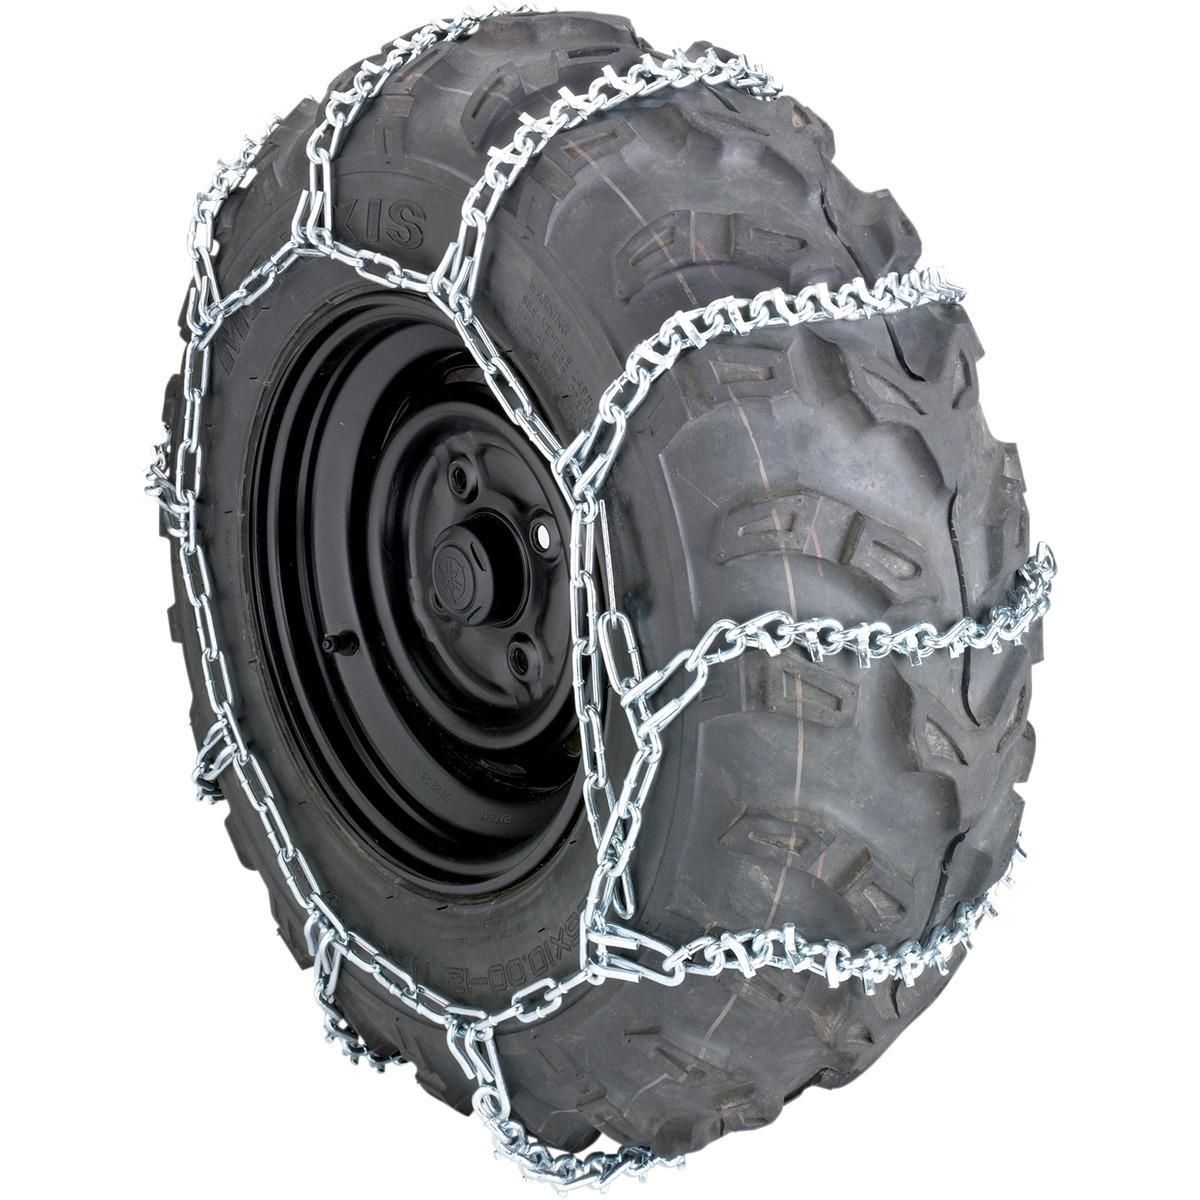 3HOK-MOOSE-UTILI-M9160010 10-VBAR Tire Chains